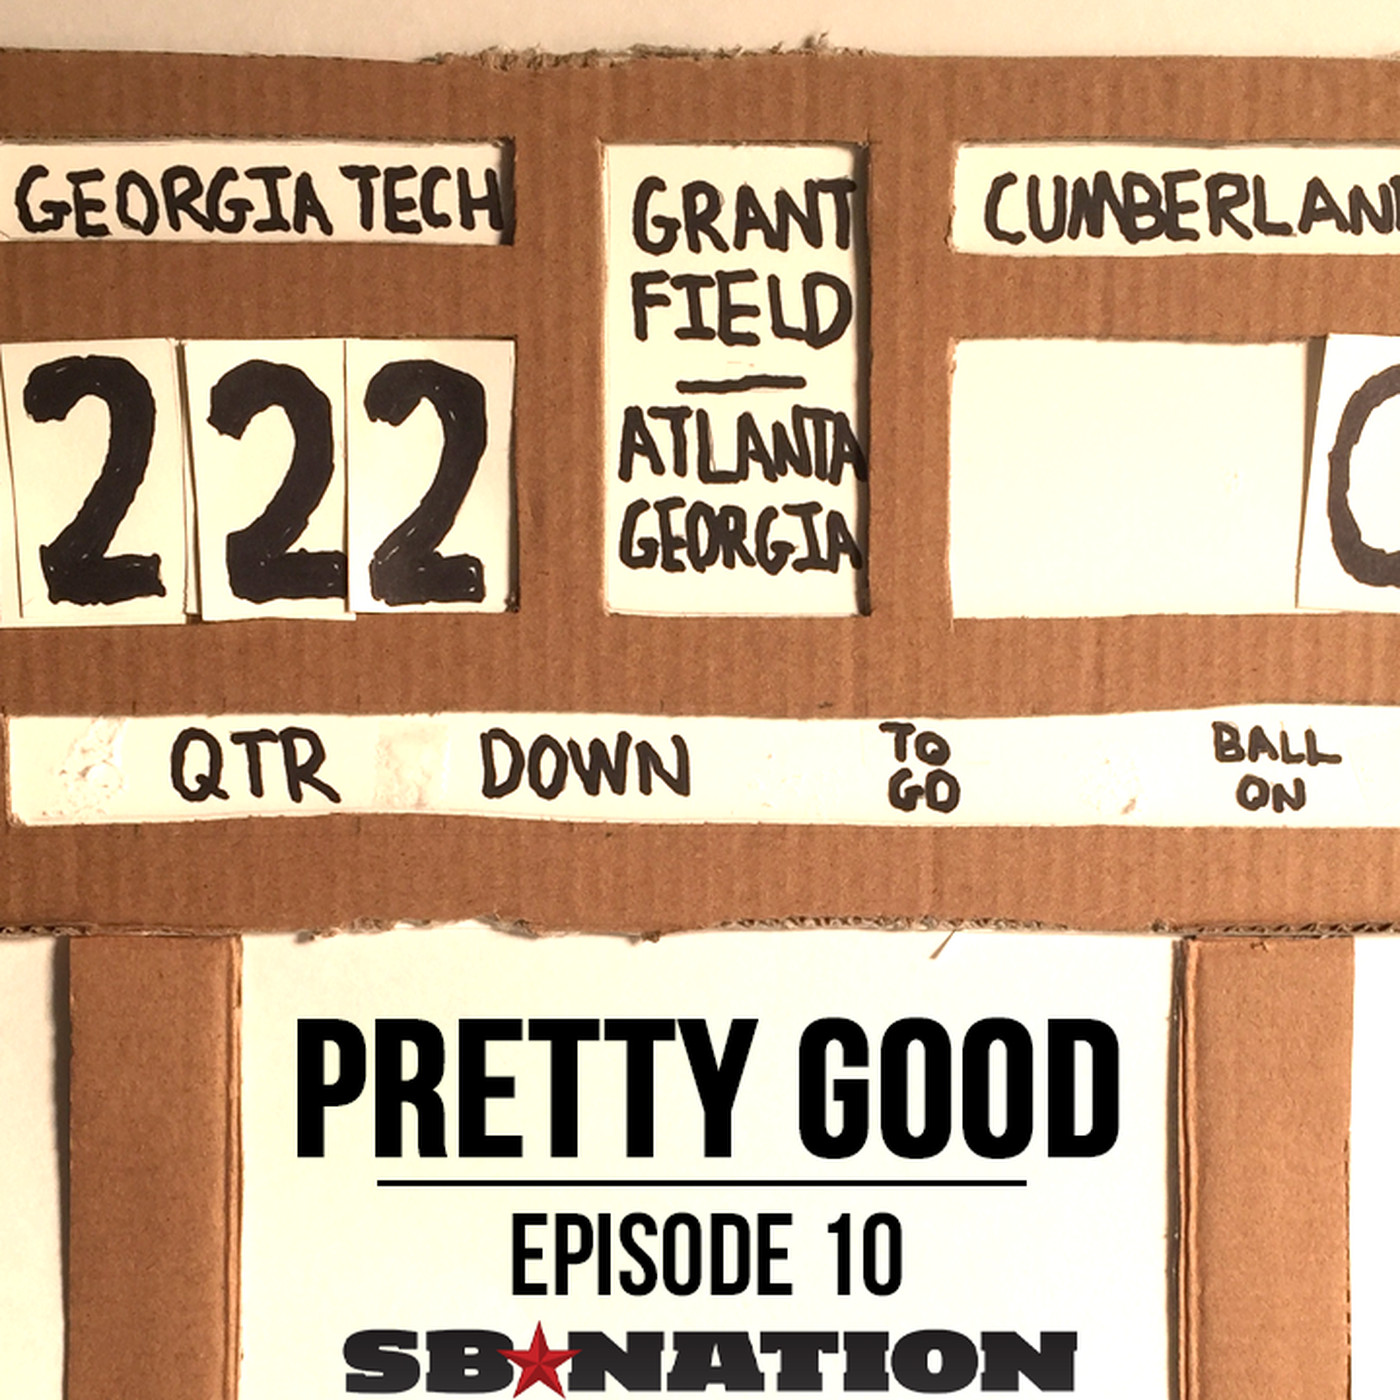 Georgia Tech 222 Cumberland 0 - Sbnationcom